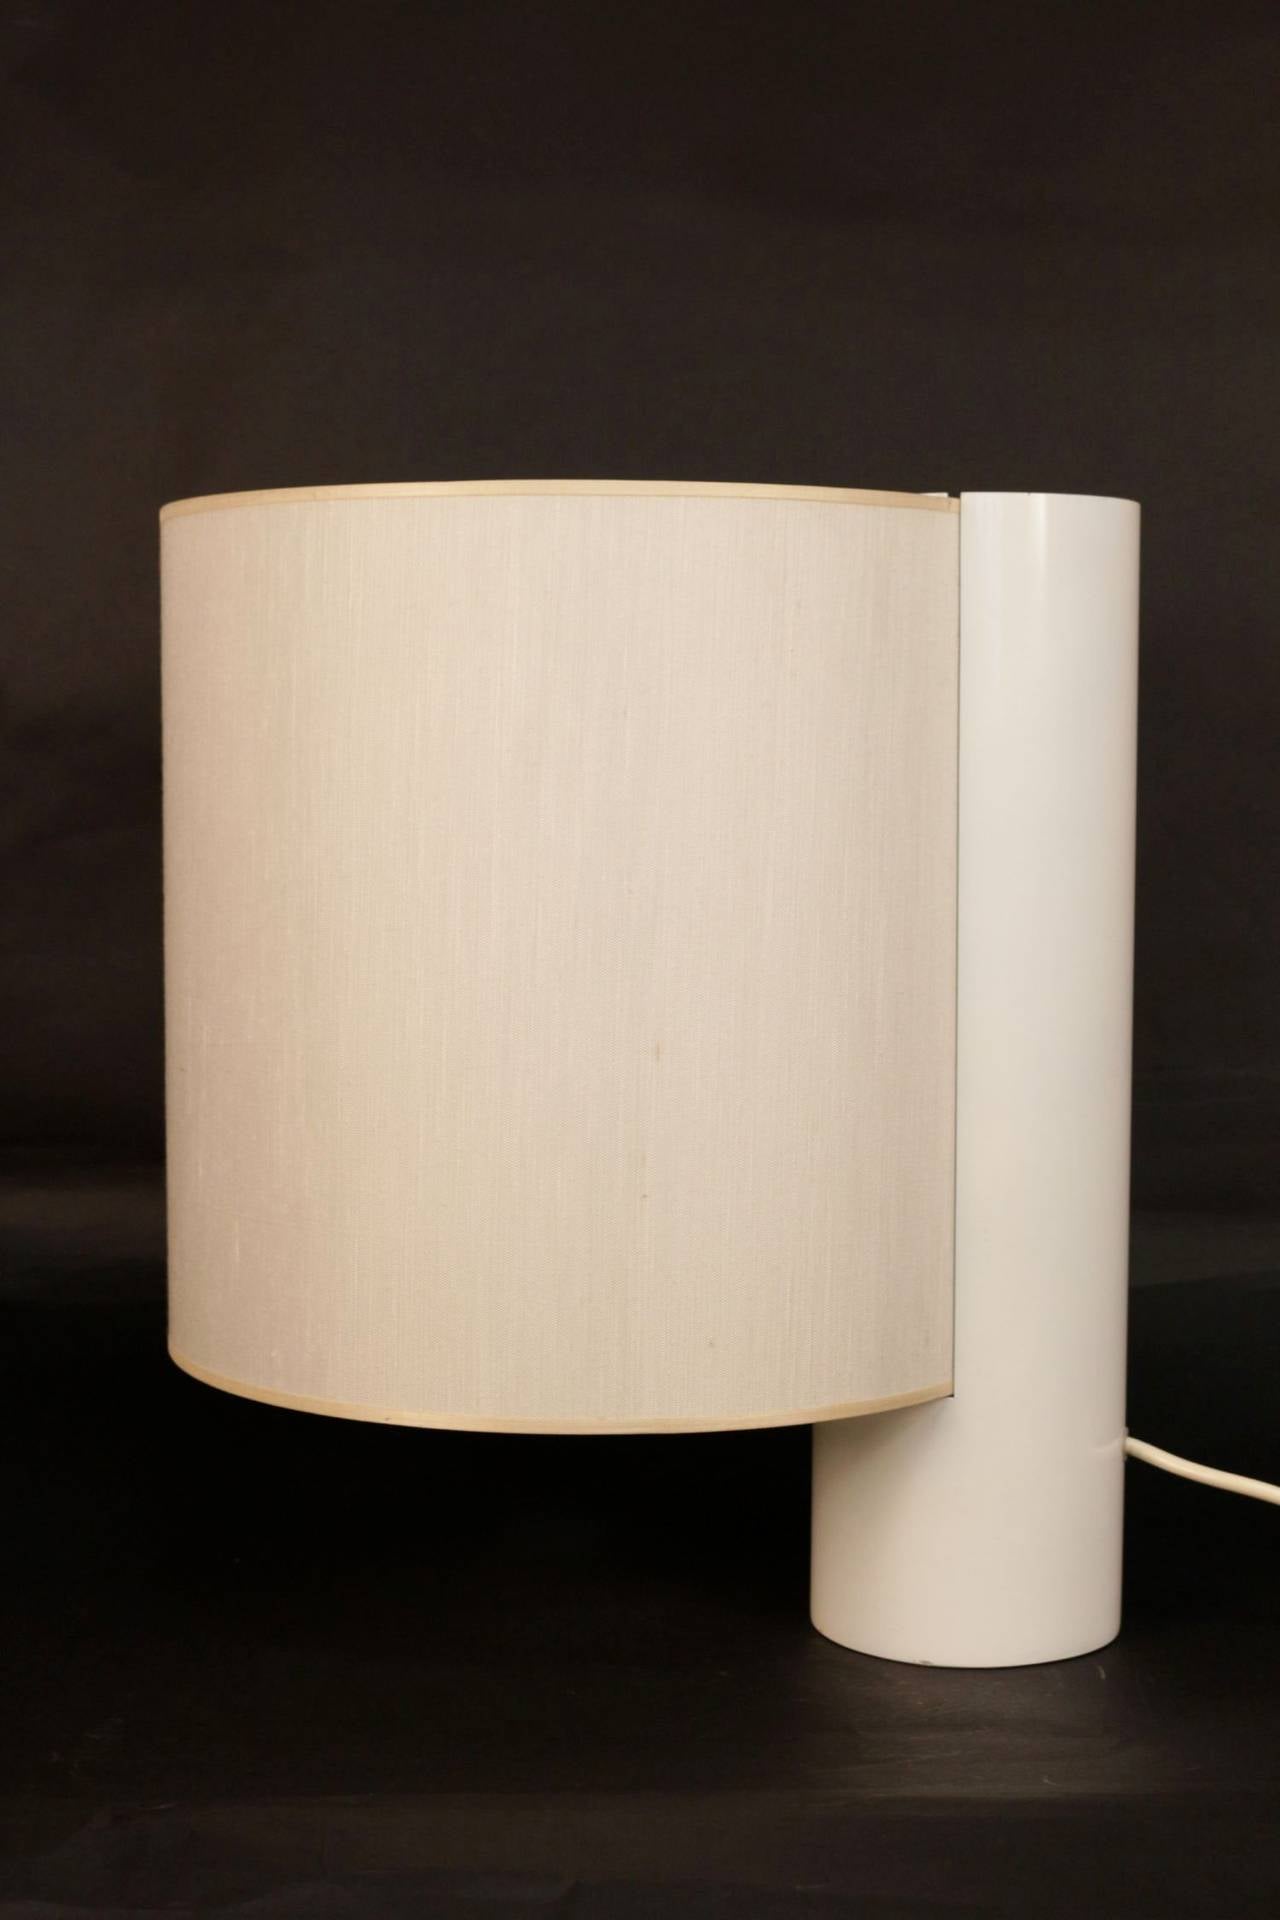 Large 1976 table lamp. 'Fluette' model by Giuliana Gramigna for Quattrifolio.
Original white lacquered aluminium trunk. Original fabric lamp shade. Two light bulbs.